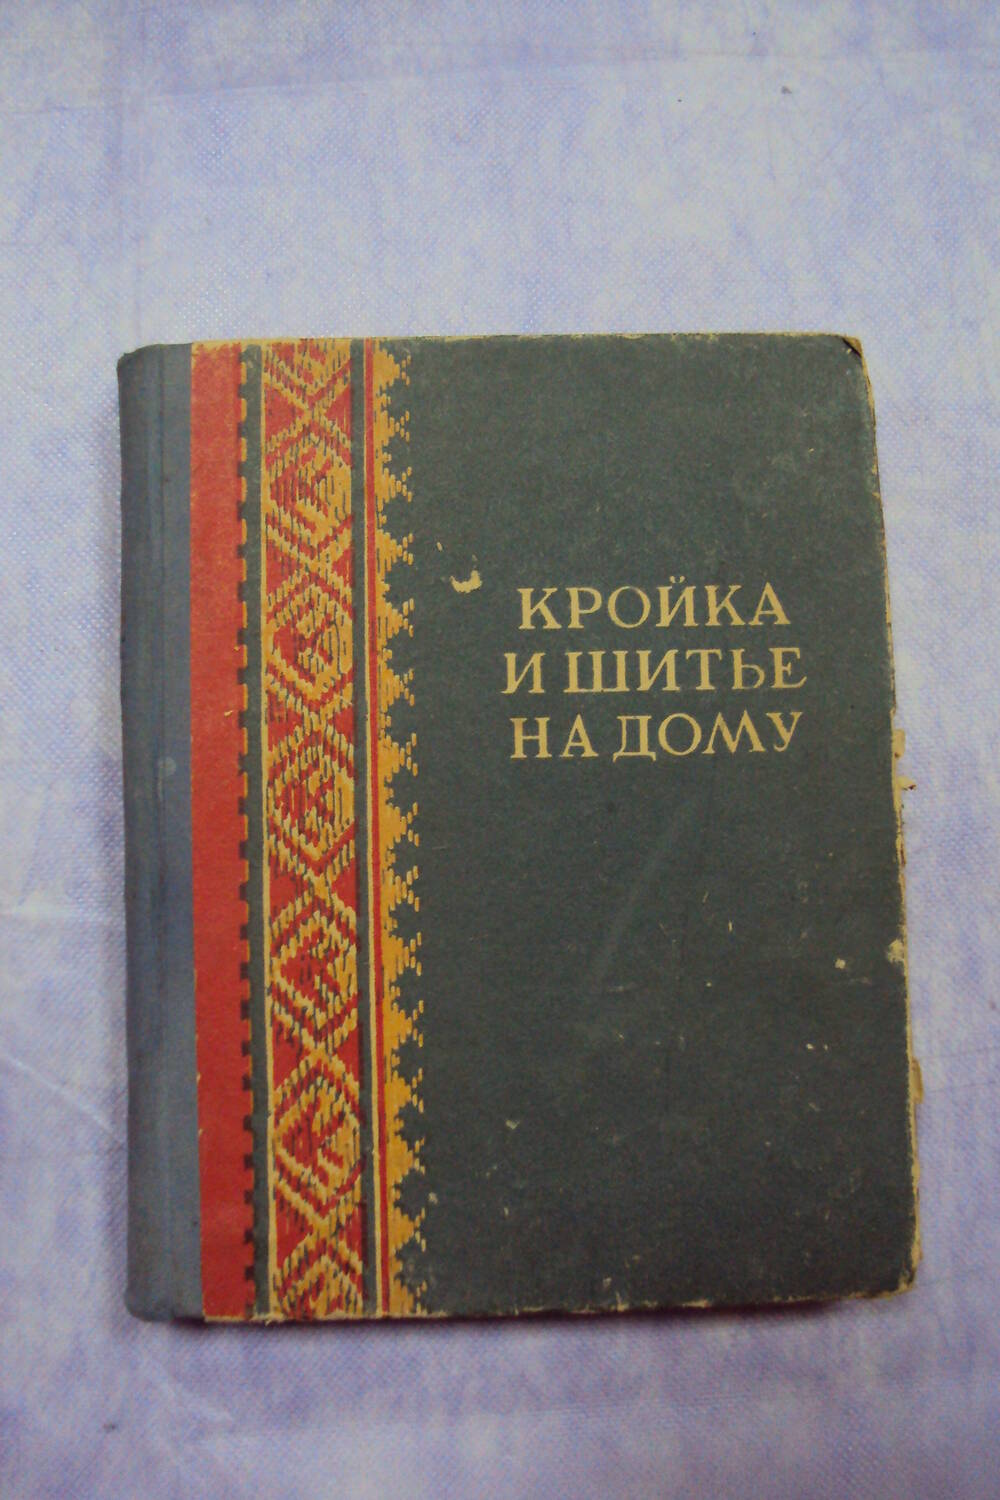 Книга «Кройка и шитье на дому». Автор Л. И. Лисюткина